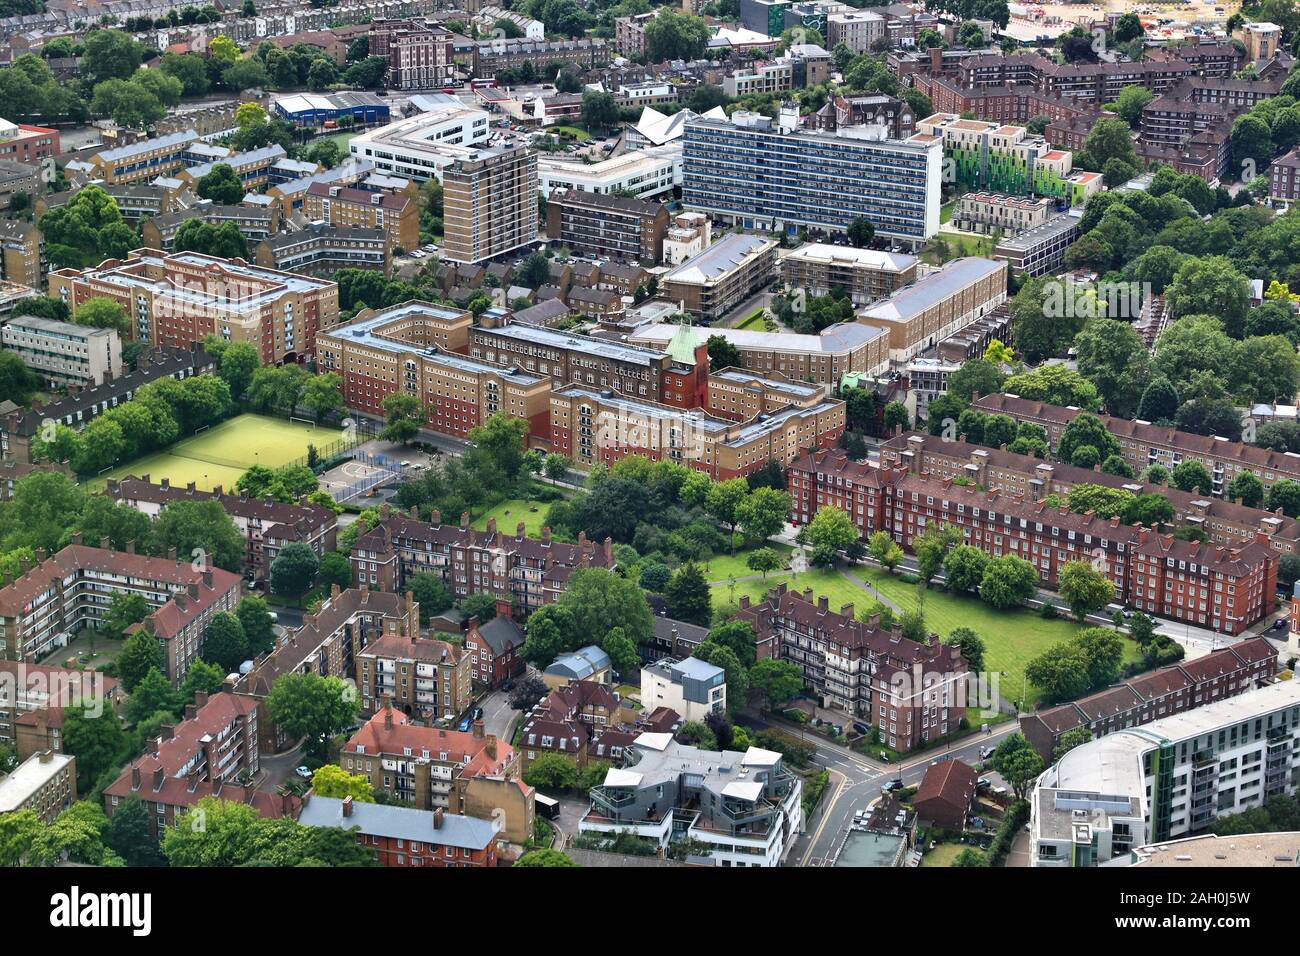 Londoner Stadtteil Southwark - Ansicht mit Waffenrock Gärten. Stockfoto